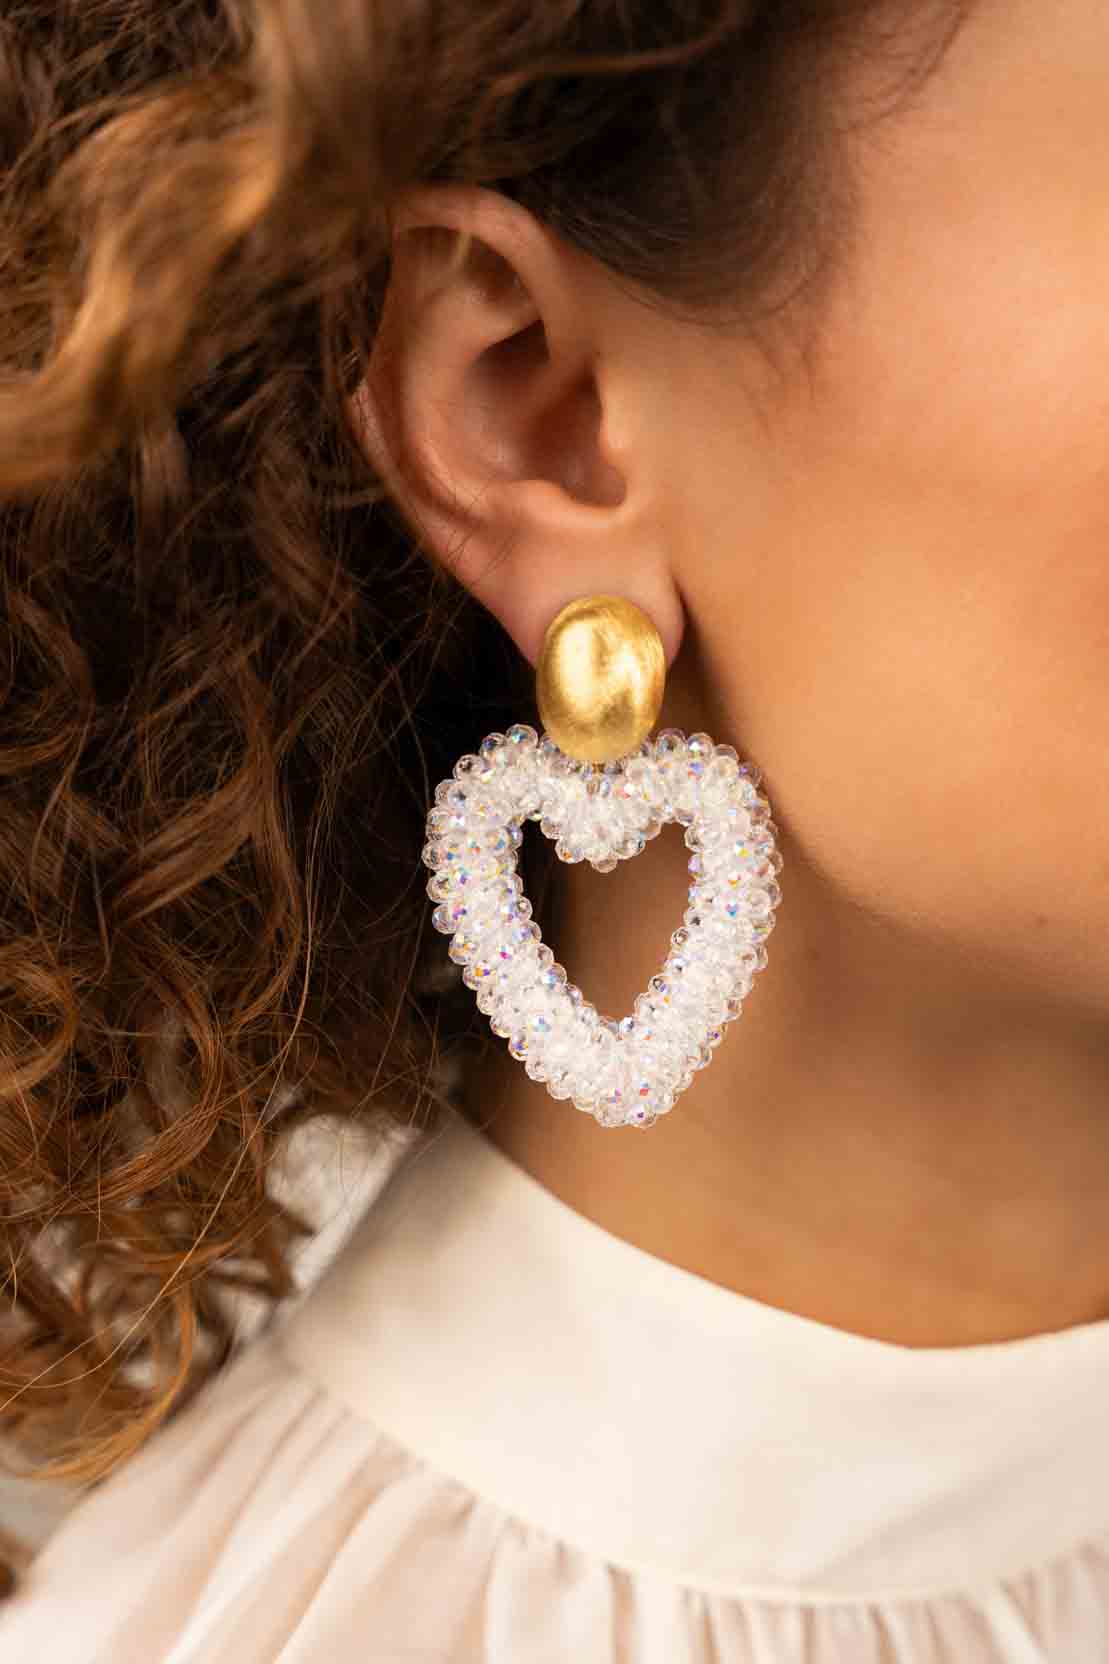 Holo Clip Earrings Heart lott-theme.productDescriptionPage.SEO.byTheBrand